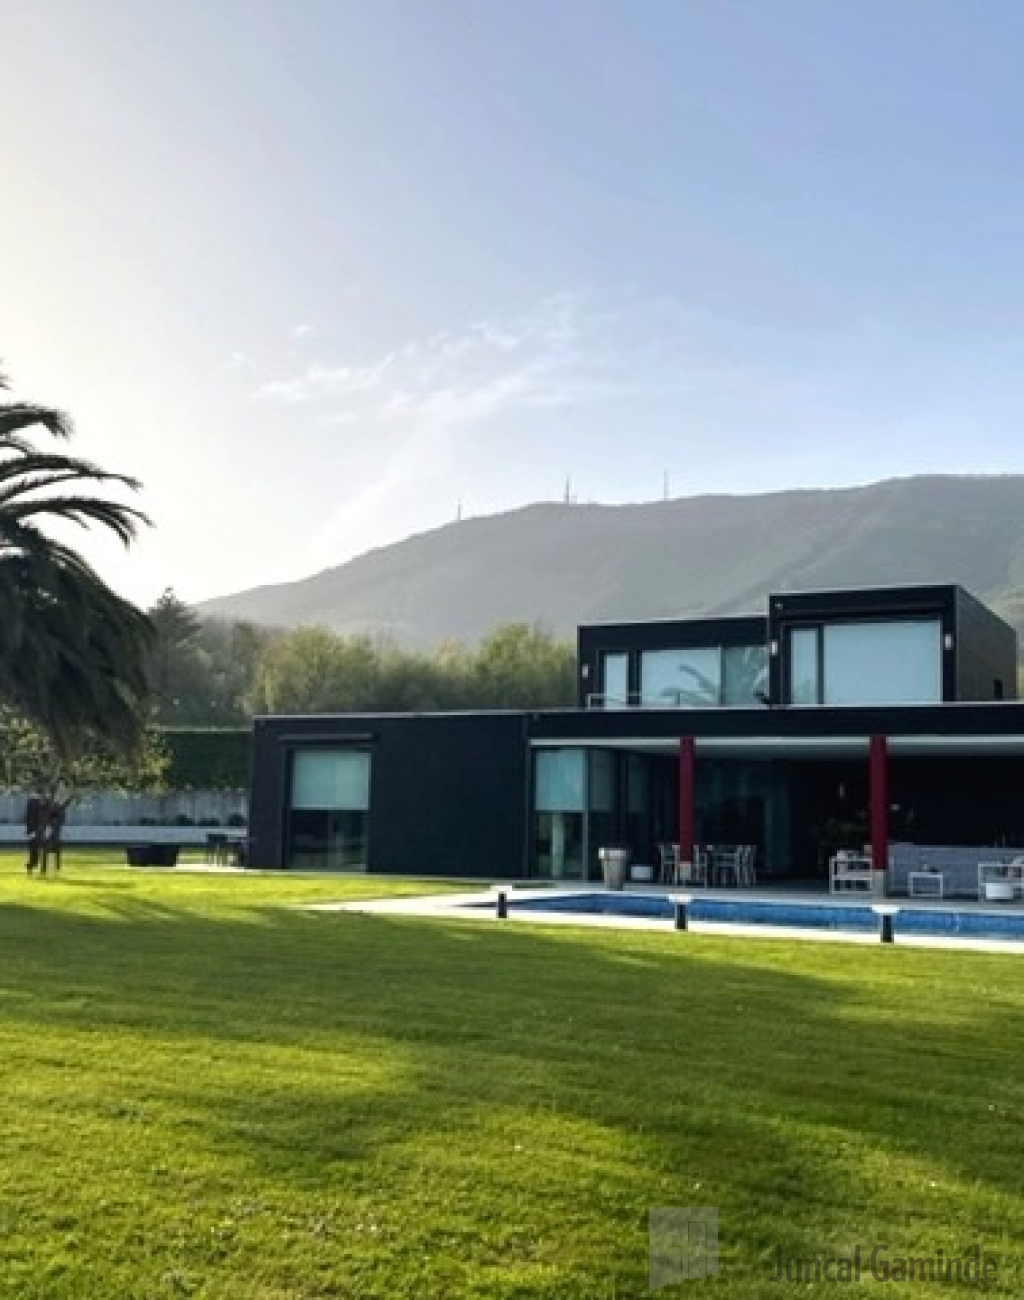 Villa individual en venta en el Golf de Hondarribia